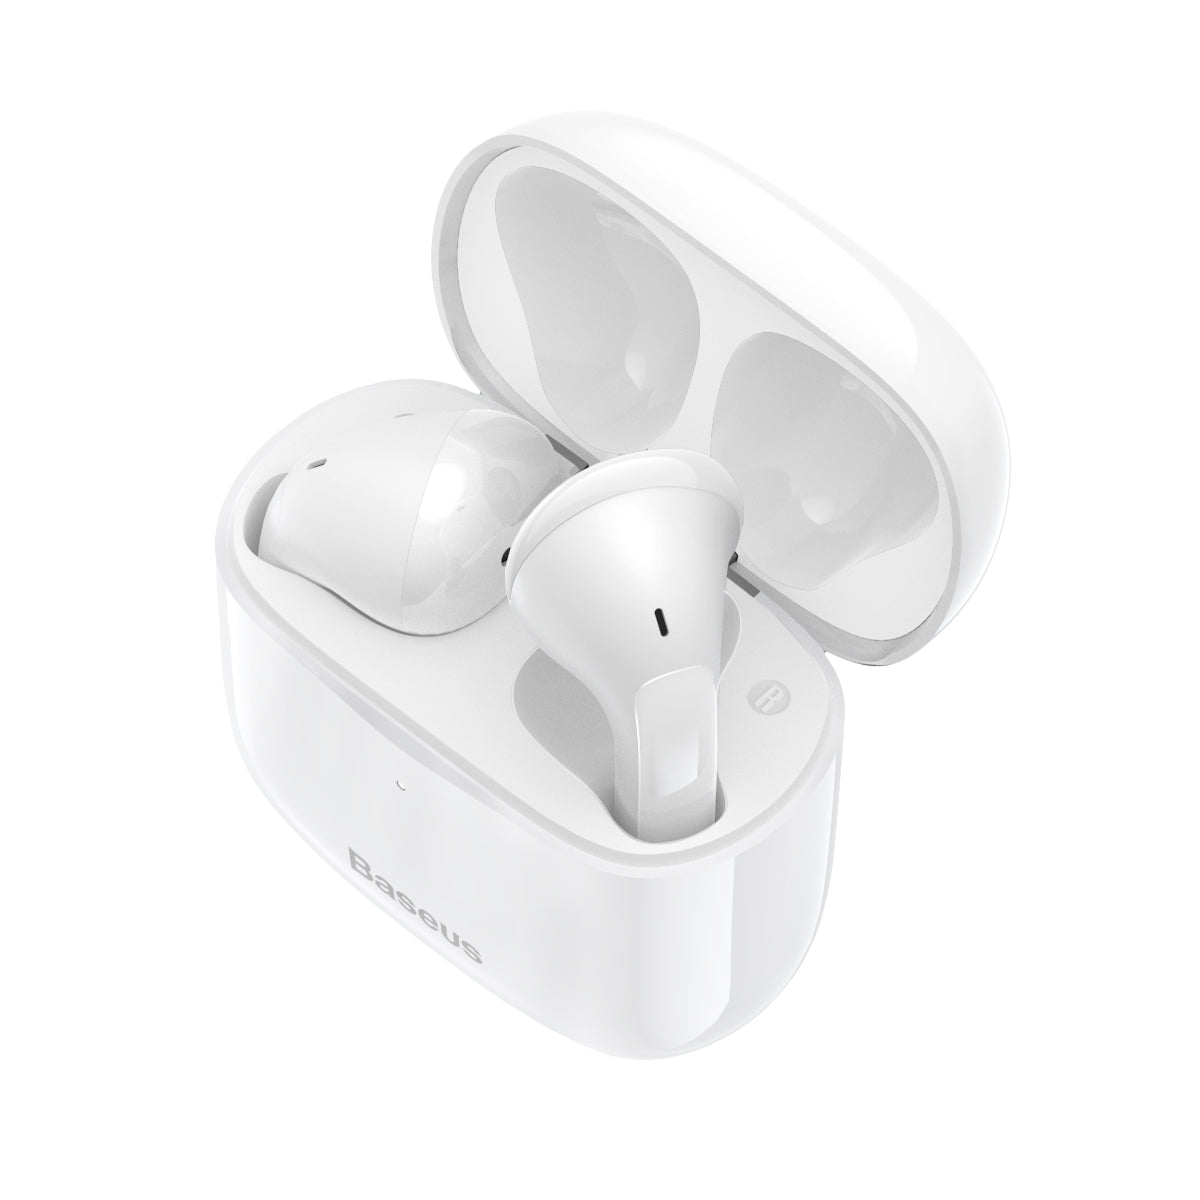 Baseus Bowie E3 Flash Charge True Wireless Bluetooth Earphones White